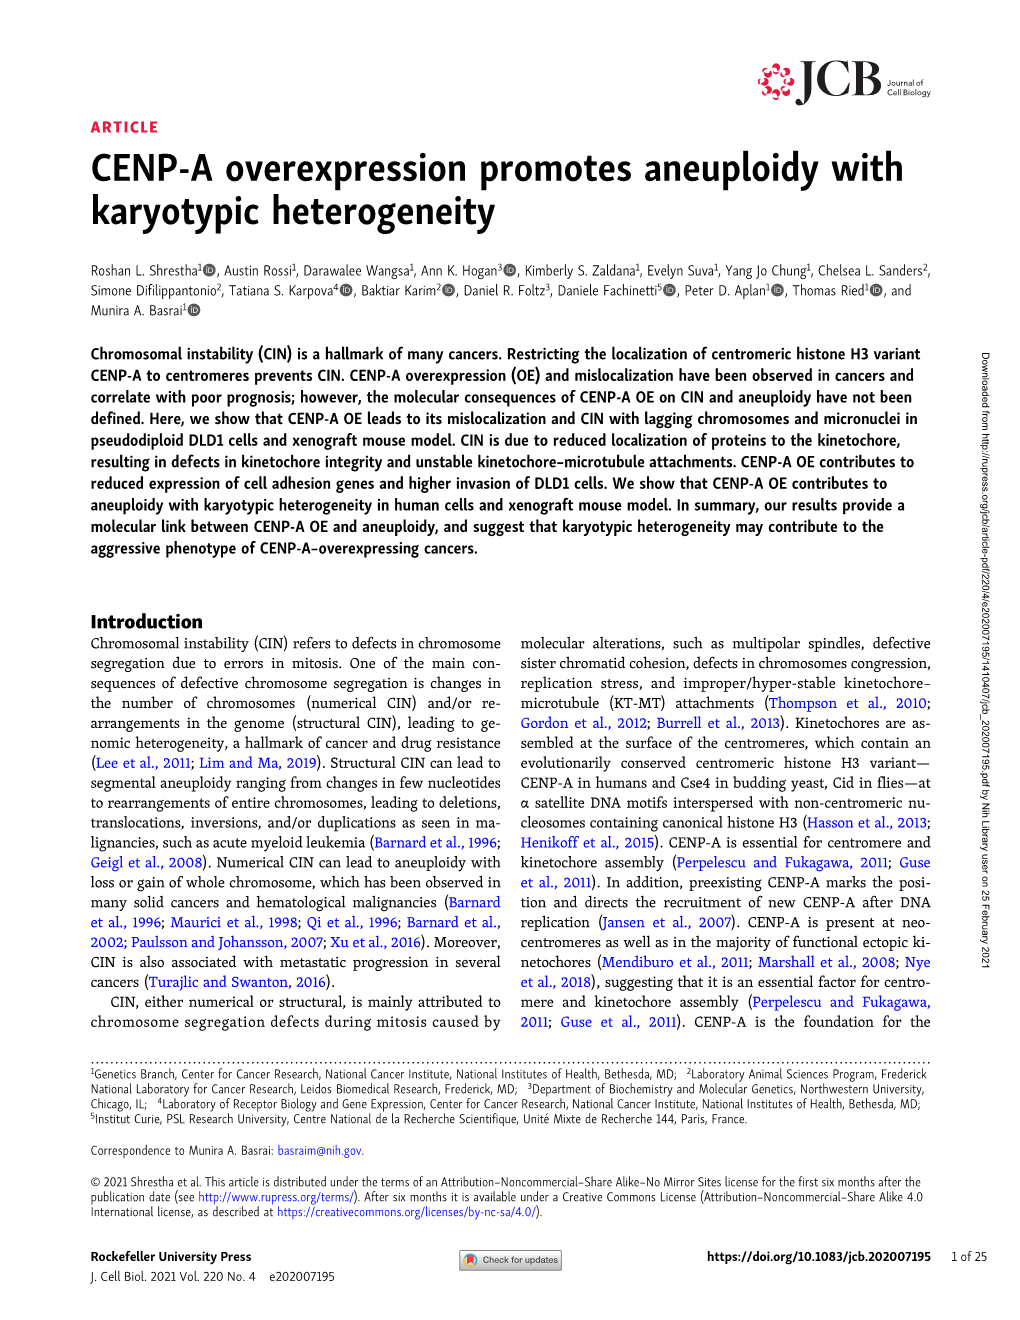 CENP-A Overexpression Promotes Aneuploidy with Karyotypic Heterogeneity